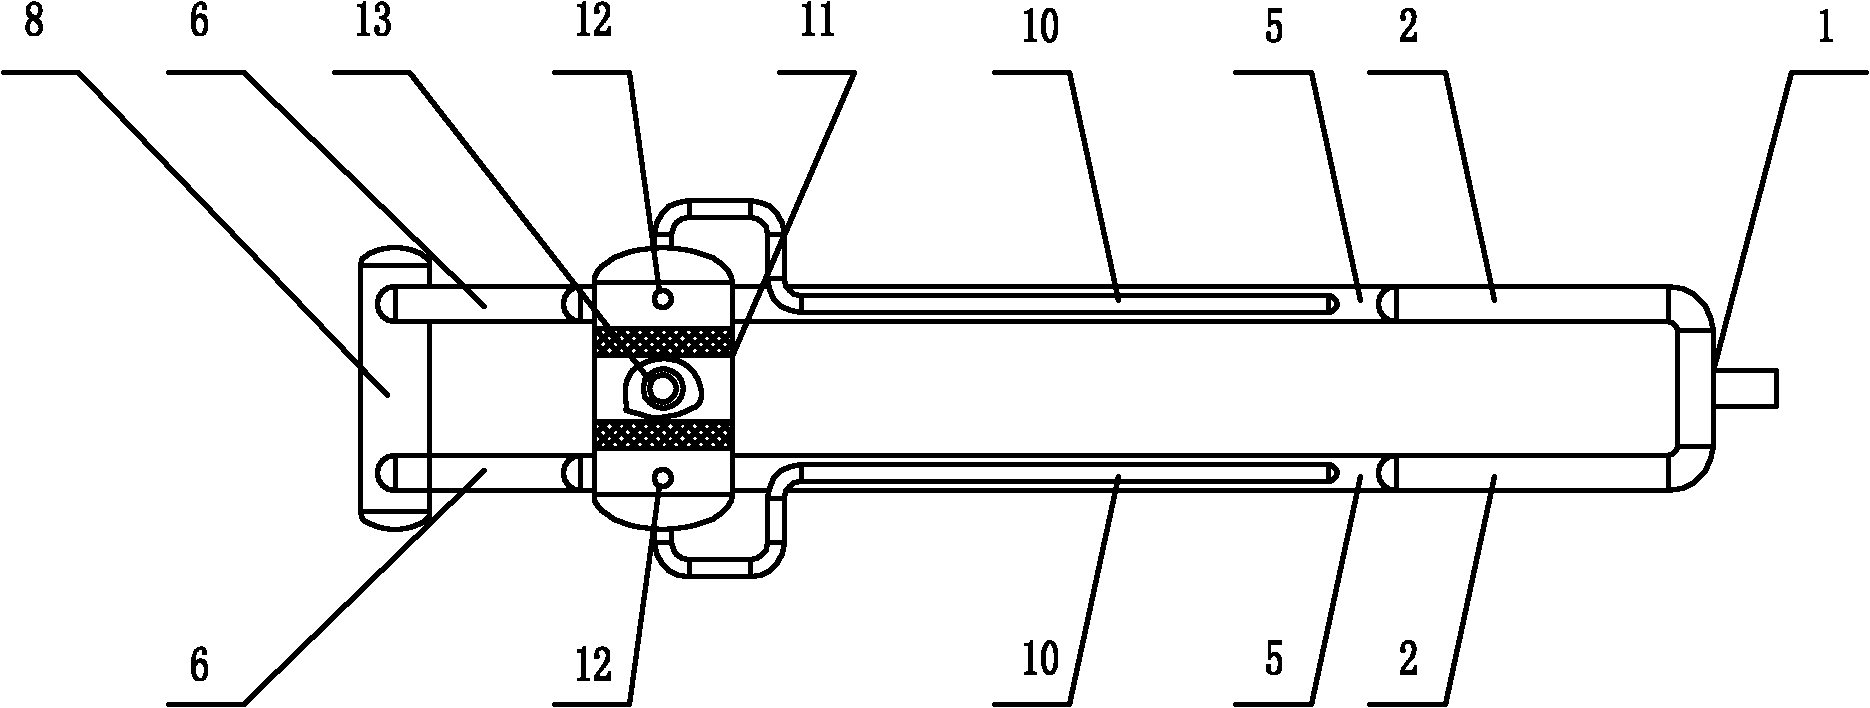 Updip entrance double-layer tubular slug flow catcher